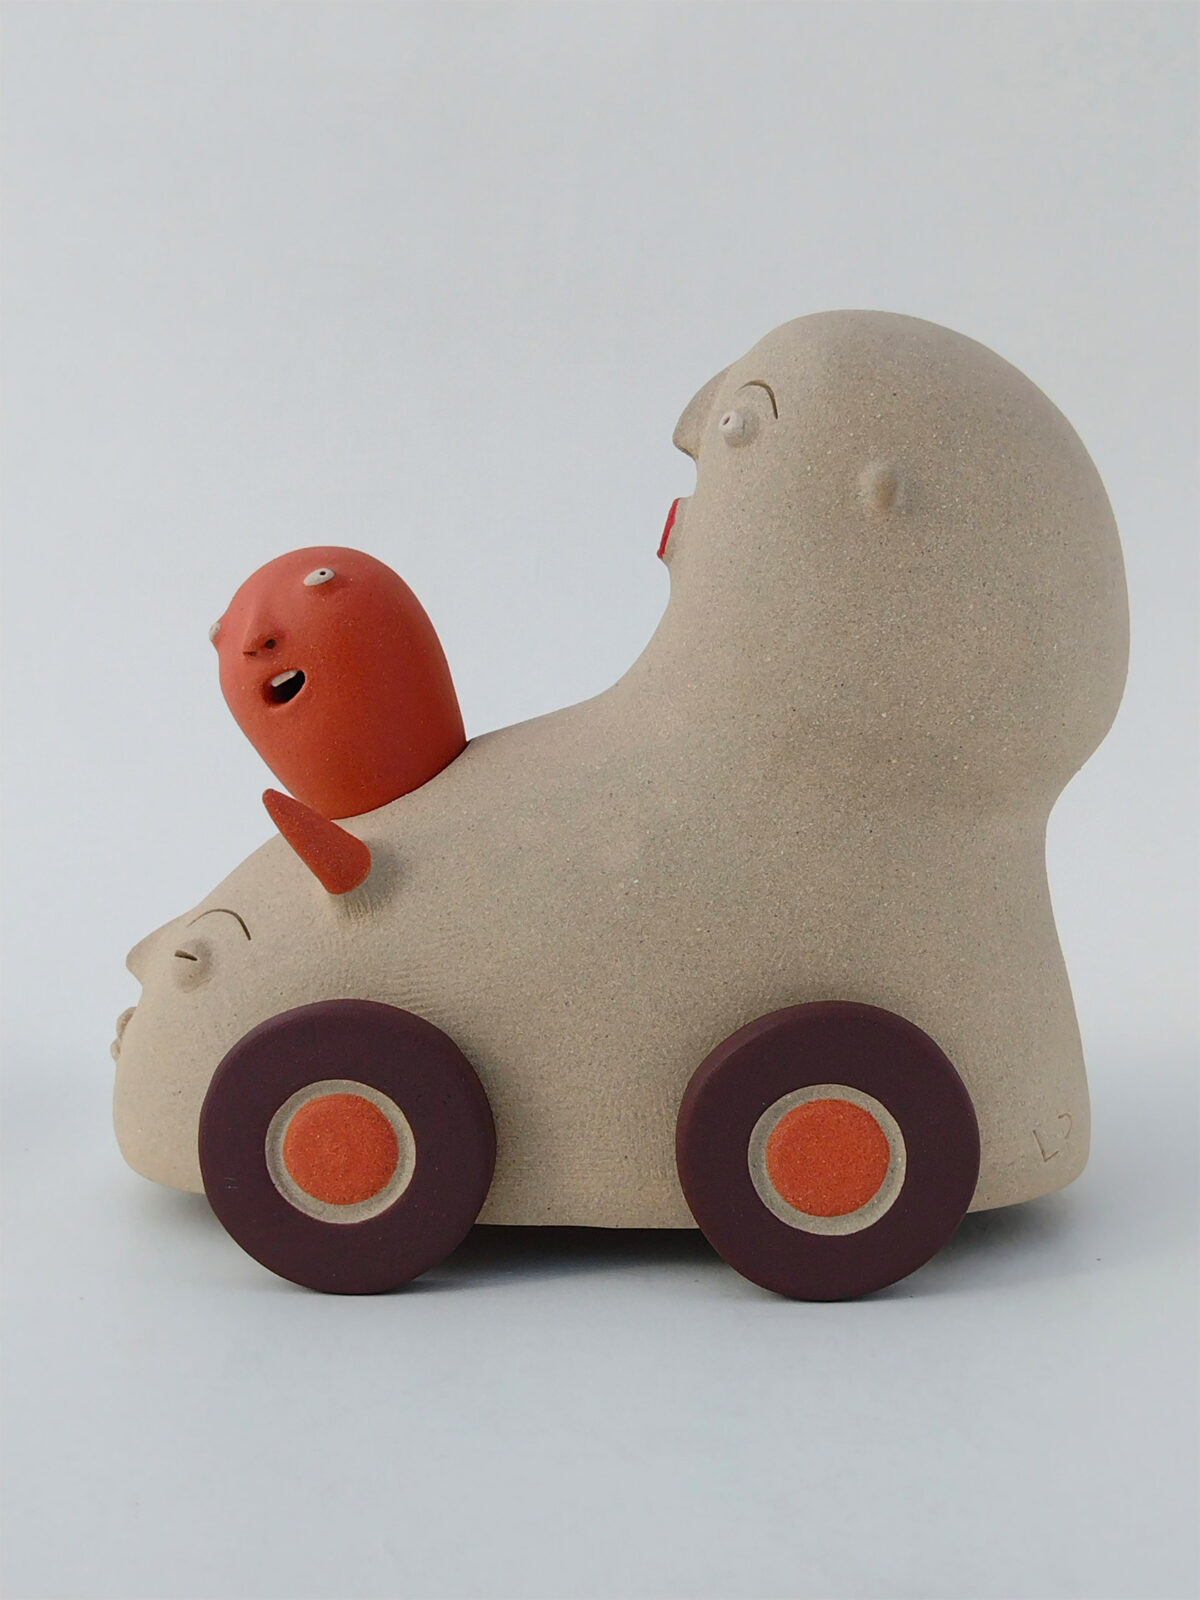 Amusing Ceramic Sculptures Of Quirky Creatures By Luciano Polverigiani (11)